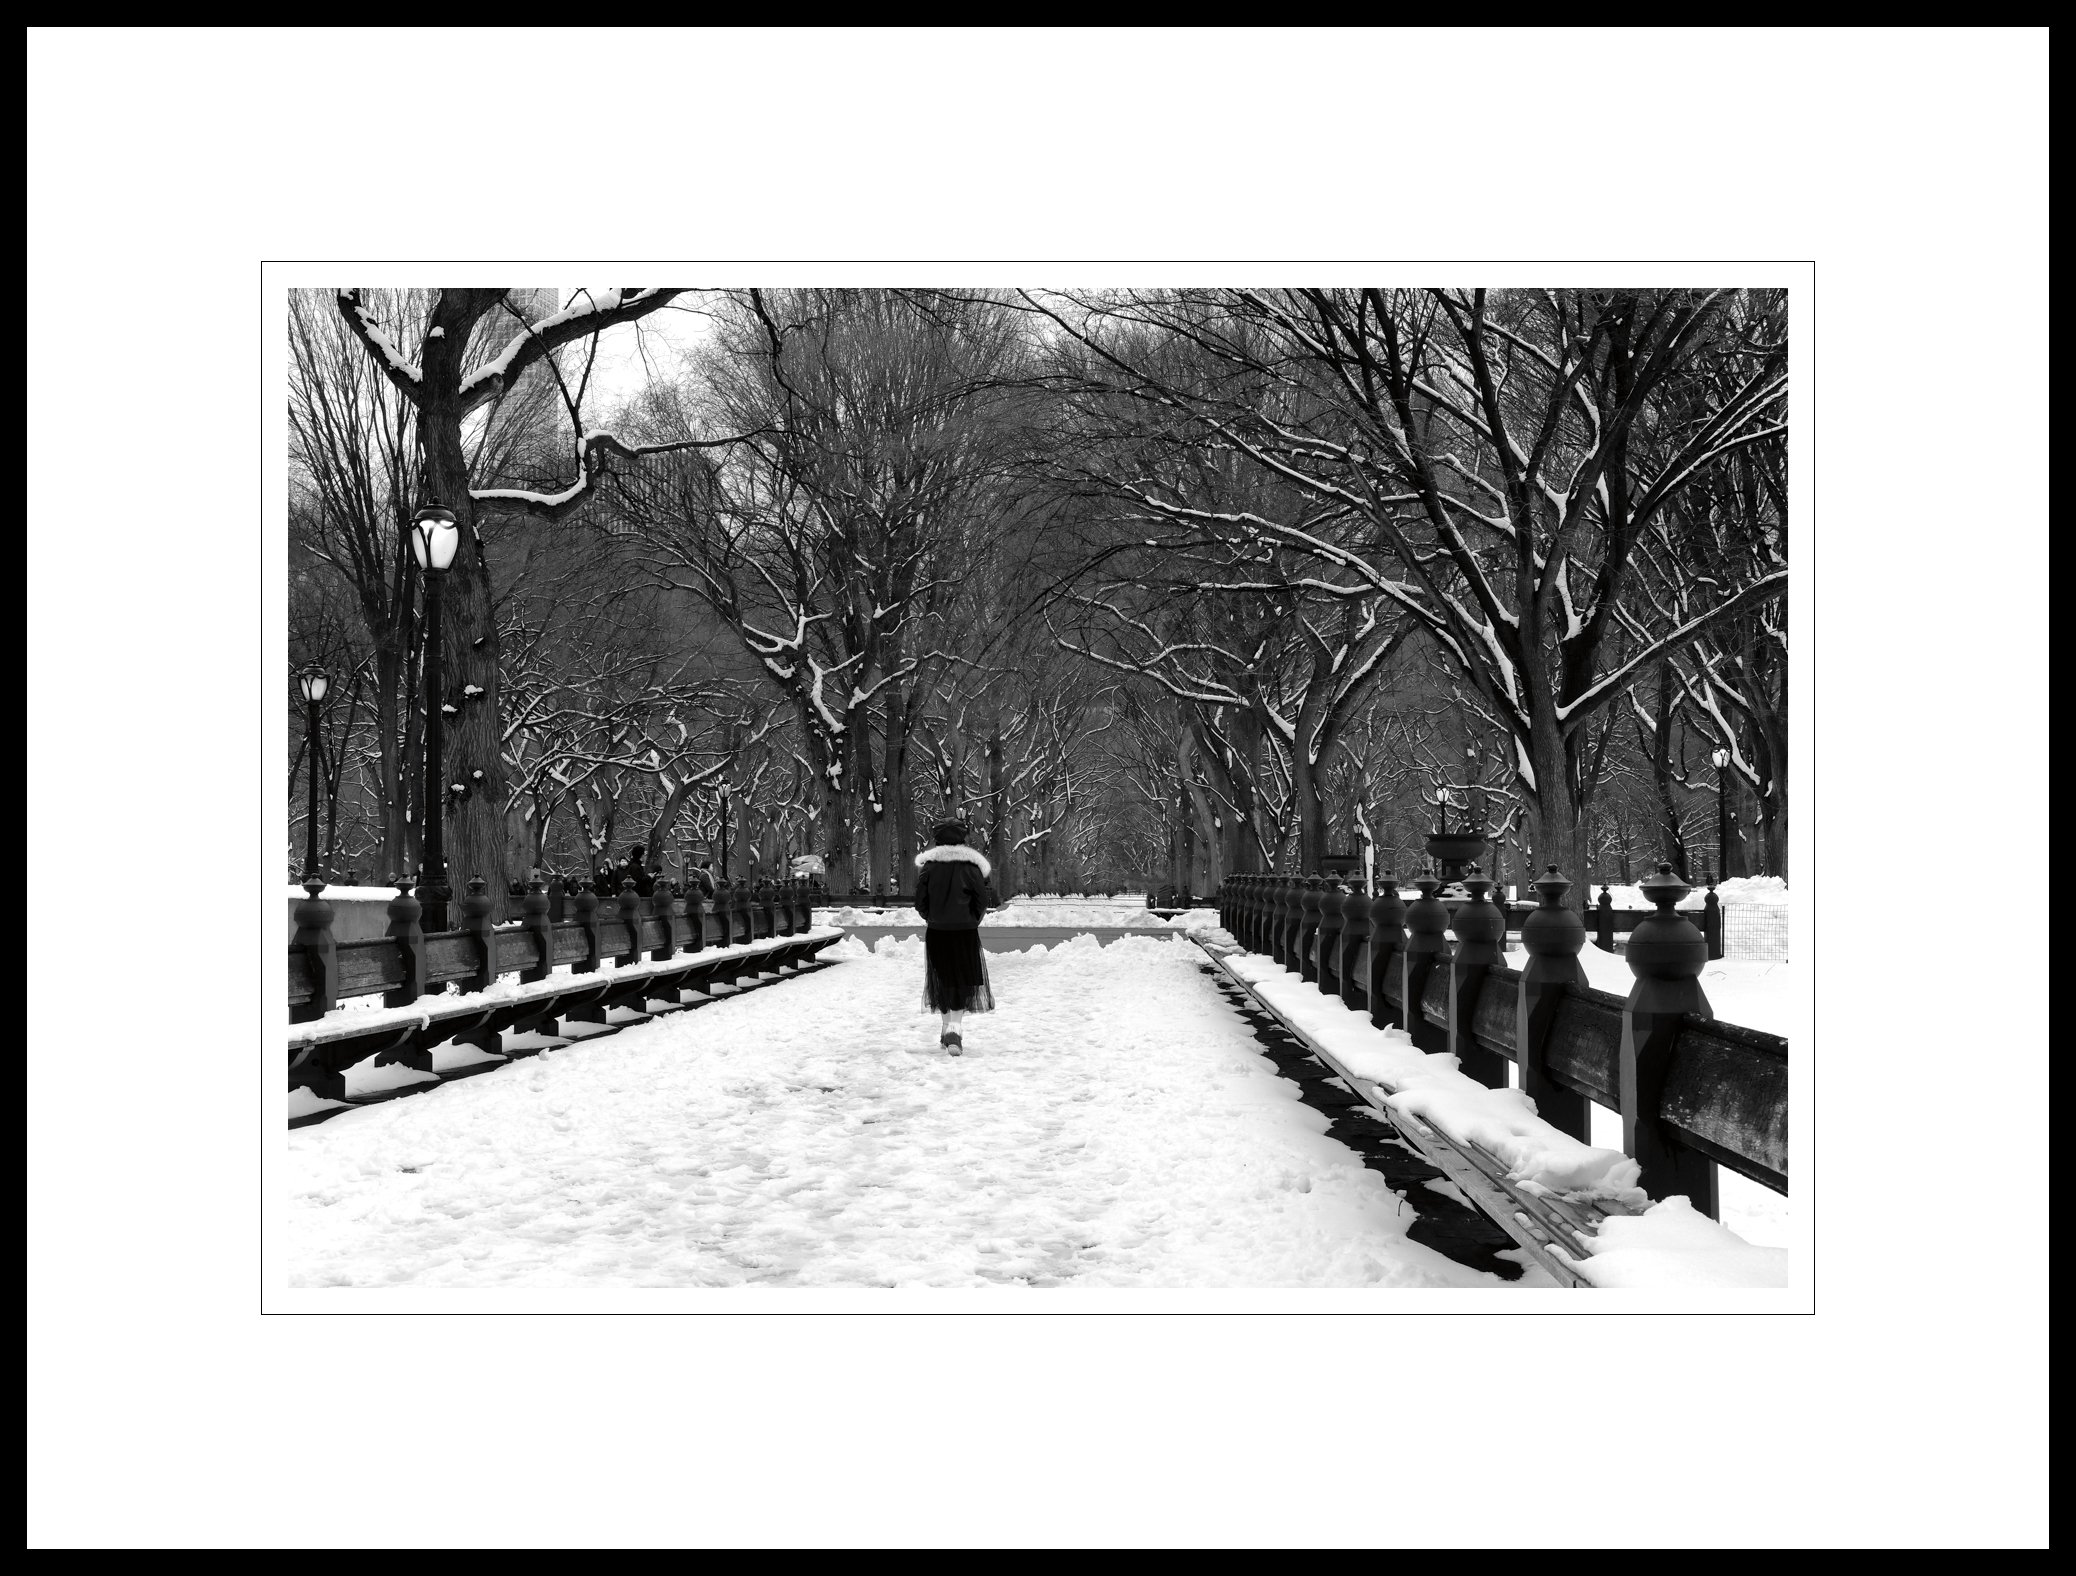   “Winter Walk”  